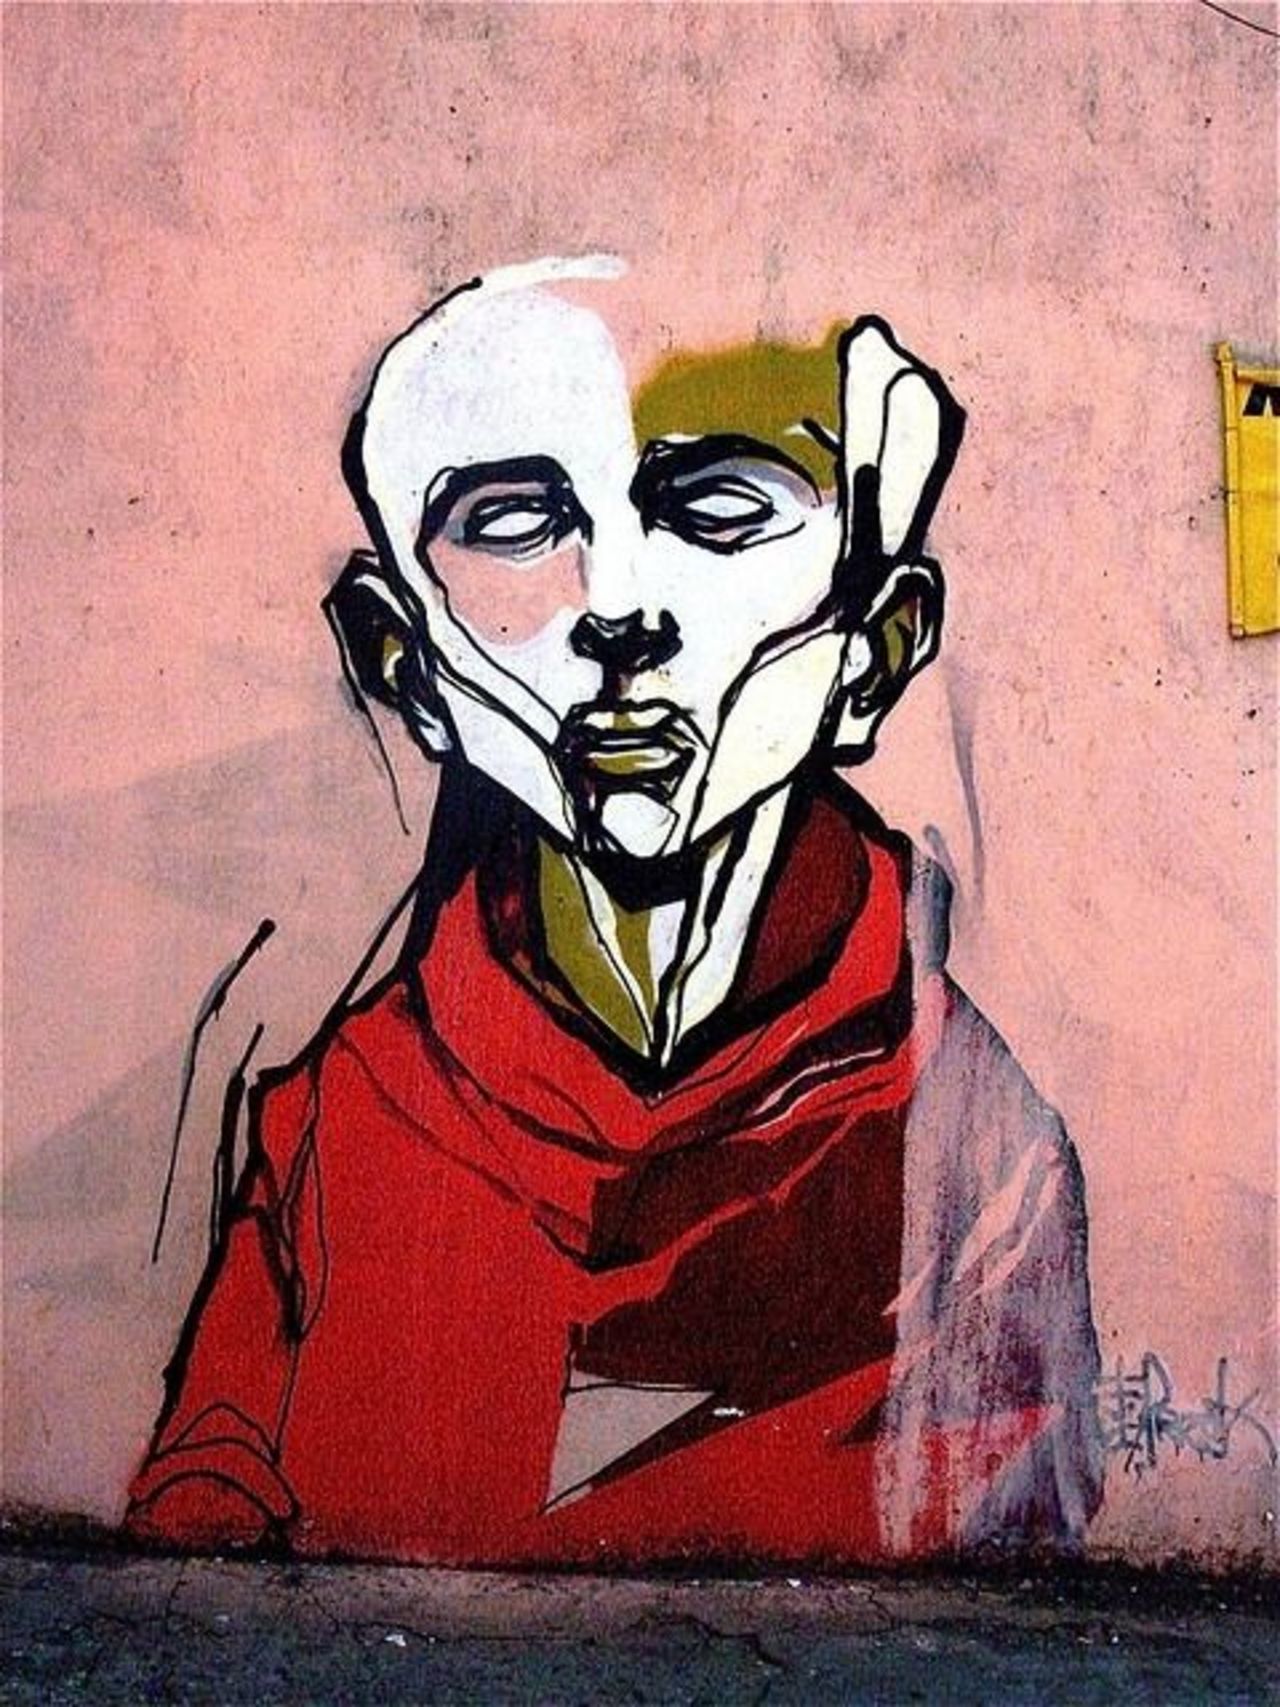 Strange Frequencies         •        #streetart #graffiti #painting #art  . : https://t.co/XONJtLRaZN